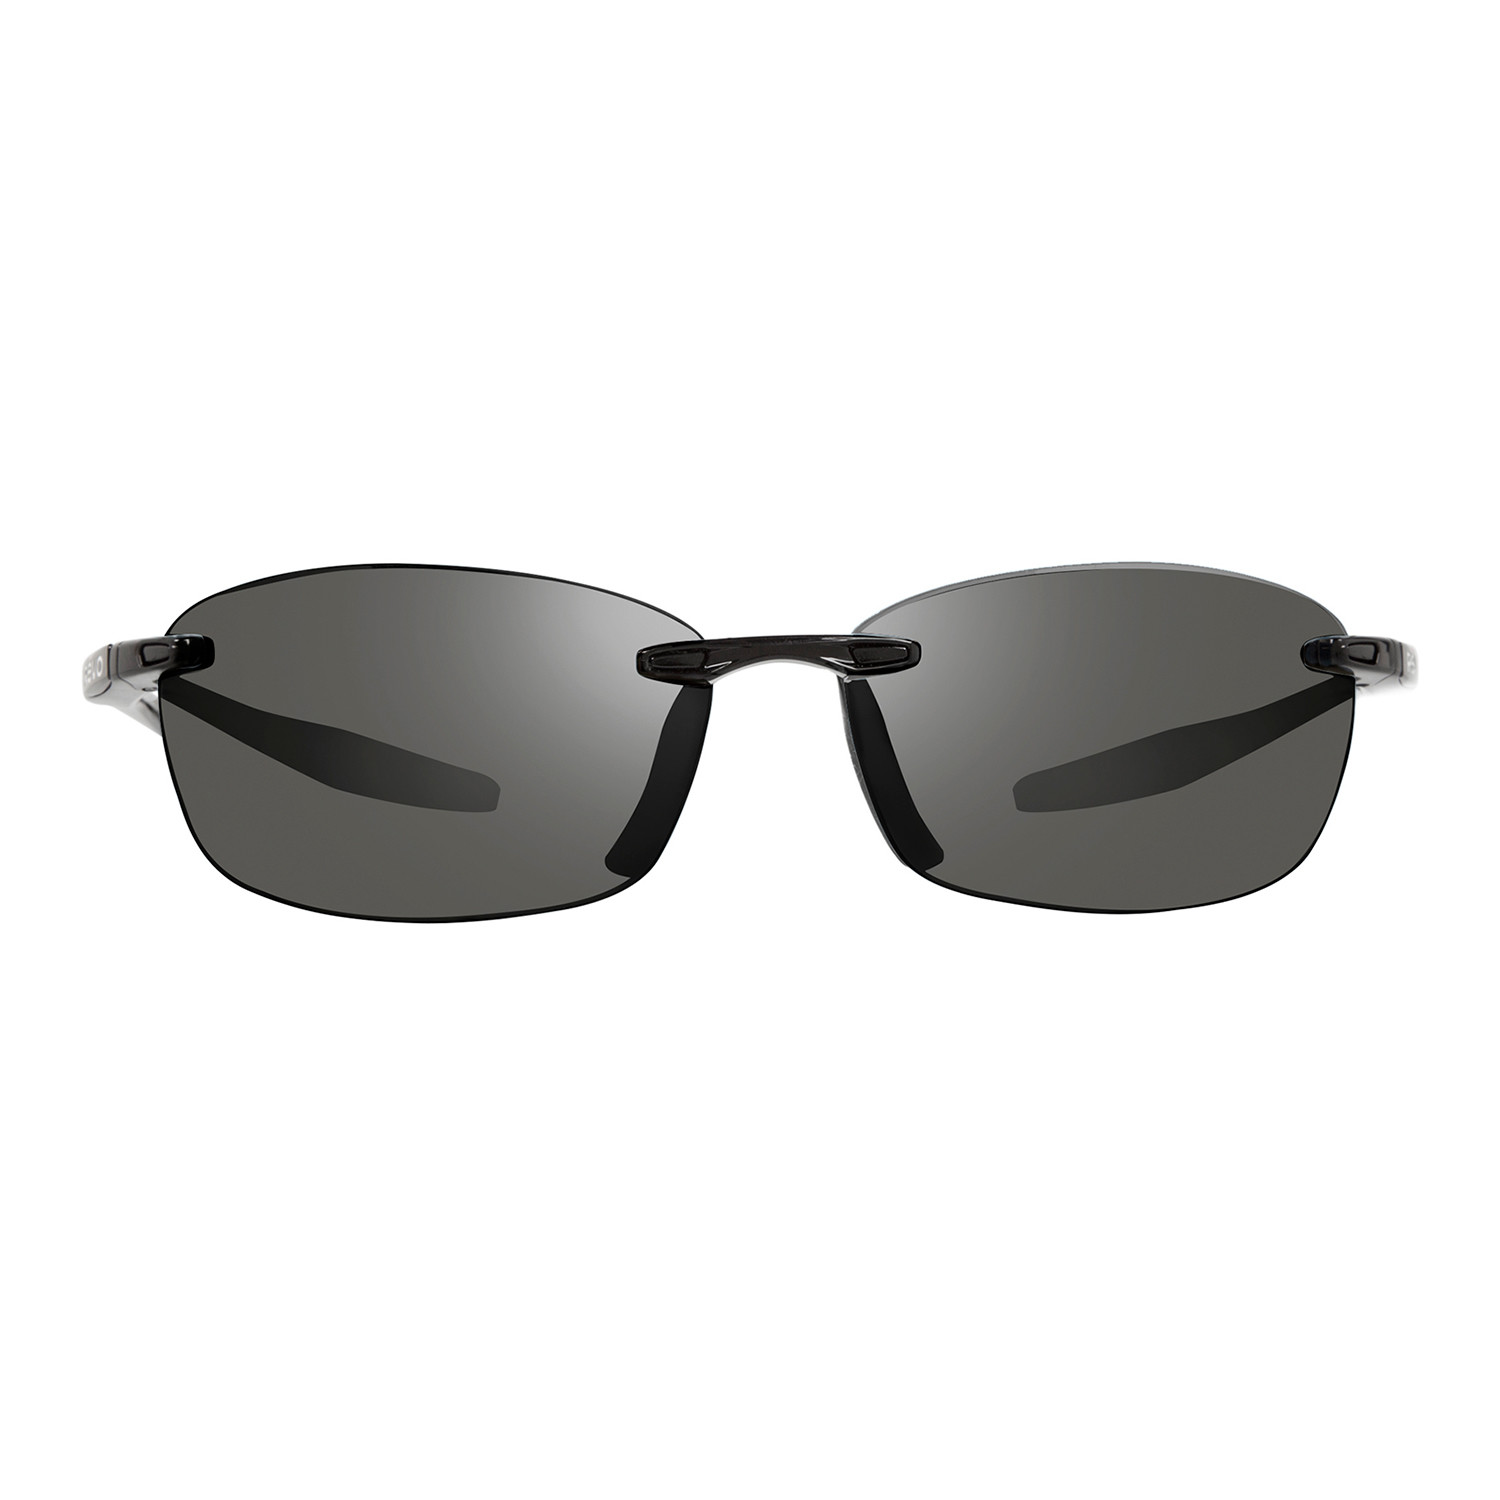 Descend Polarized Sunglasses // Black Frame + Graphite Lens - Revo ...